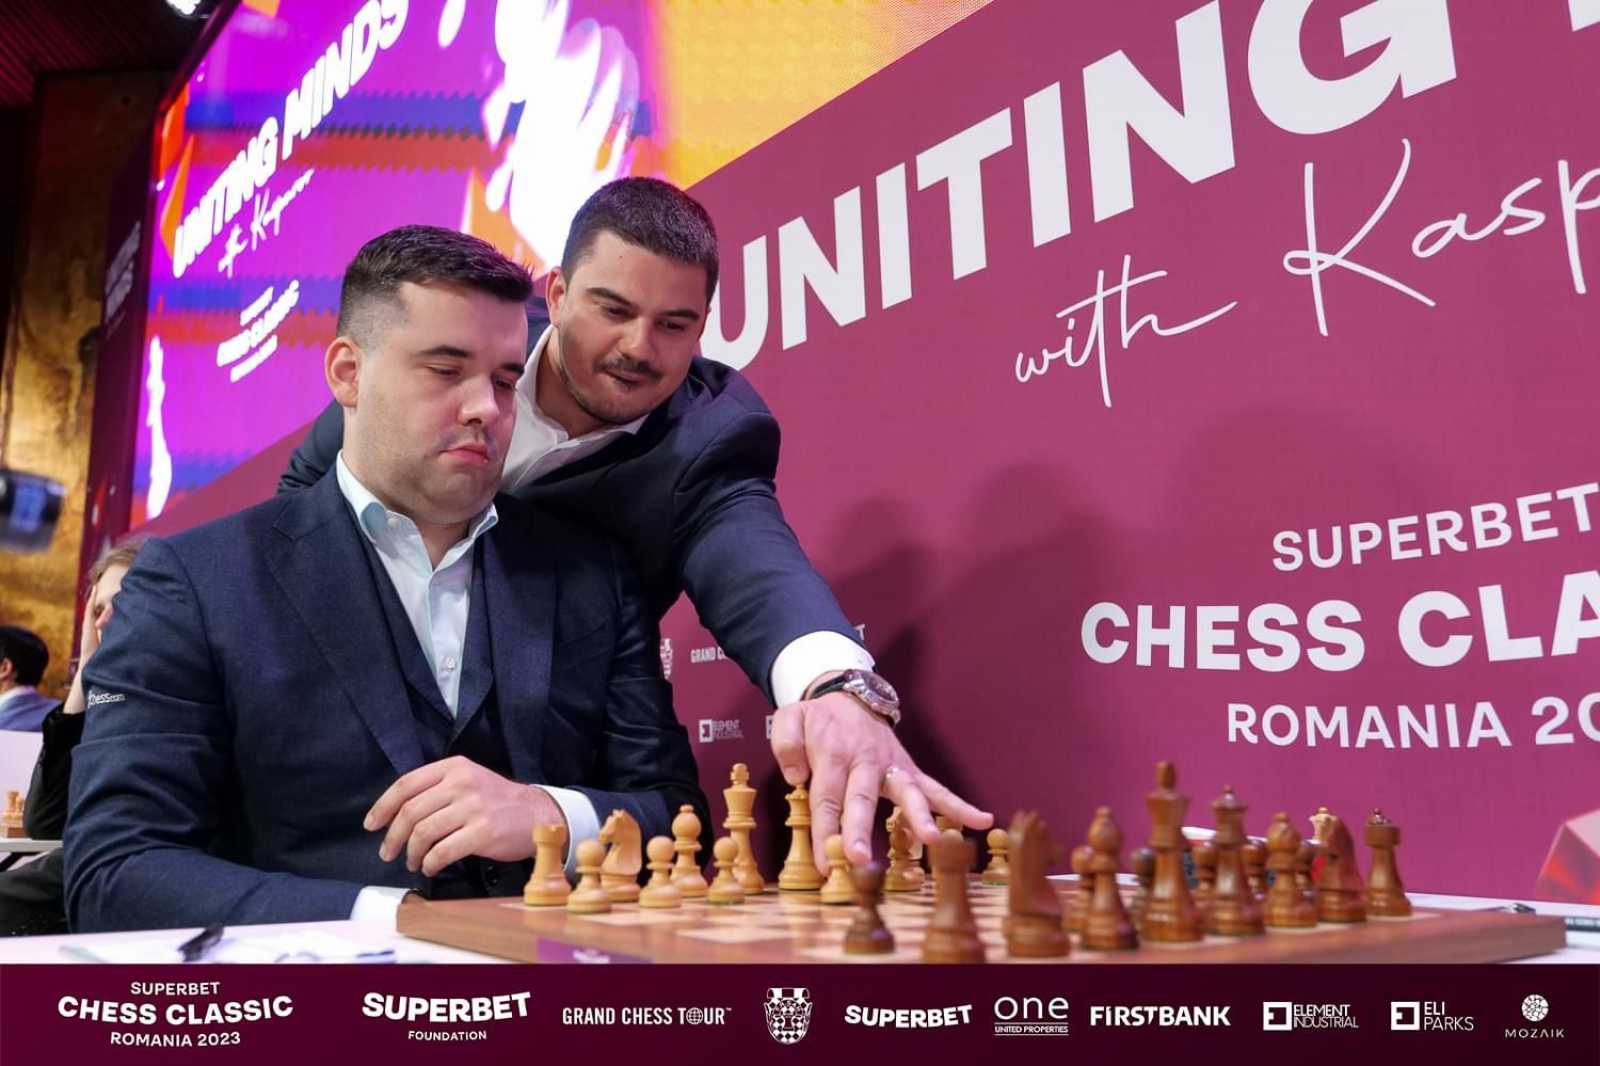 Superbet Chess Classic Romania 2023 - Winner First Move1